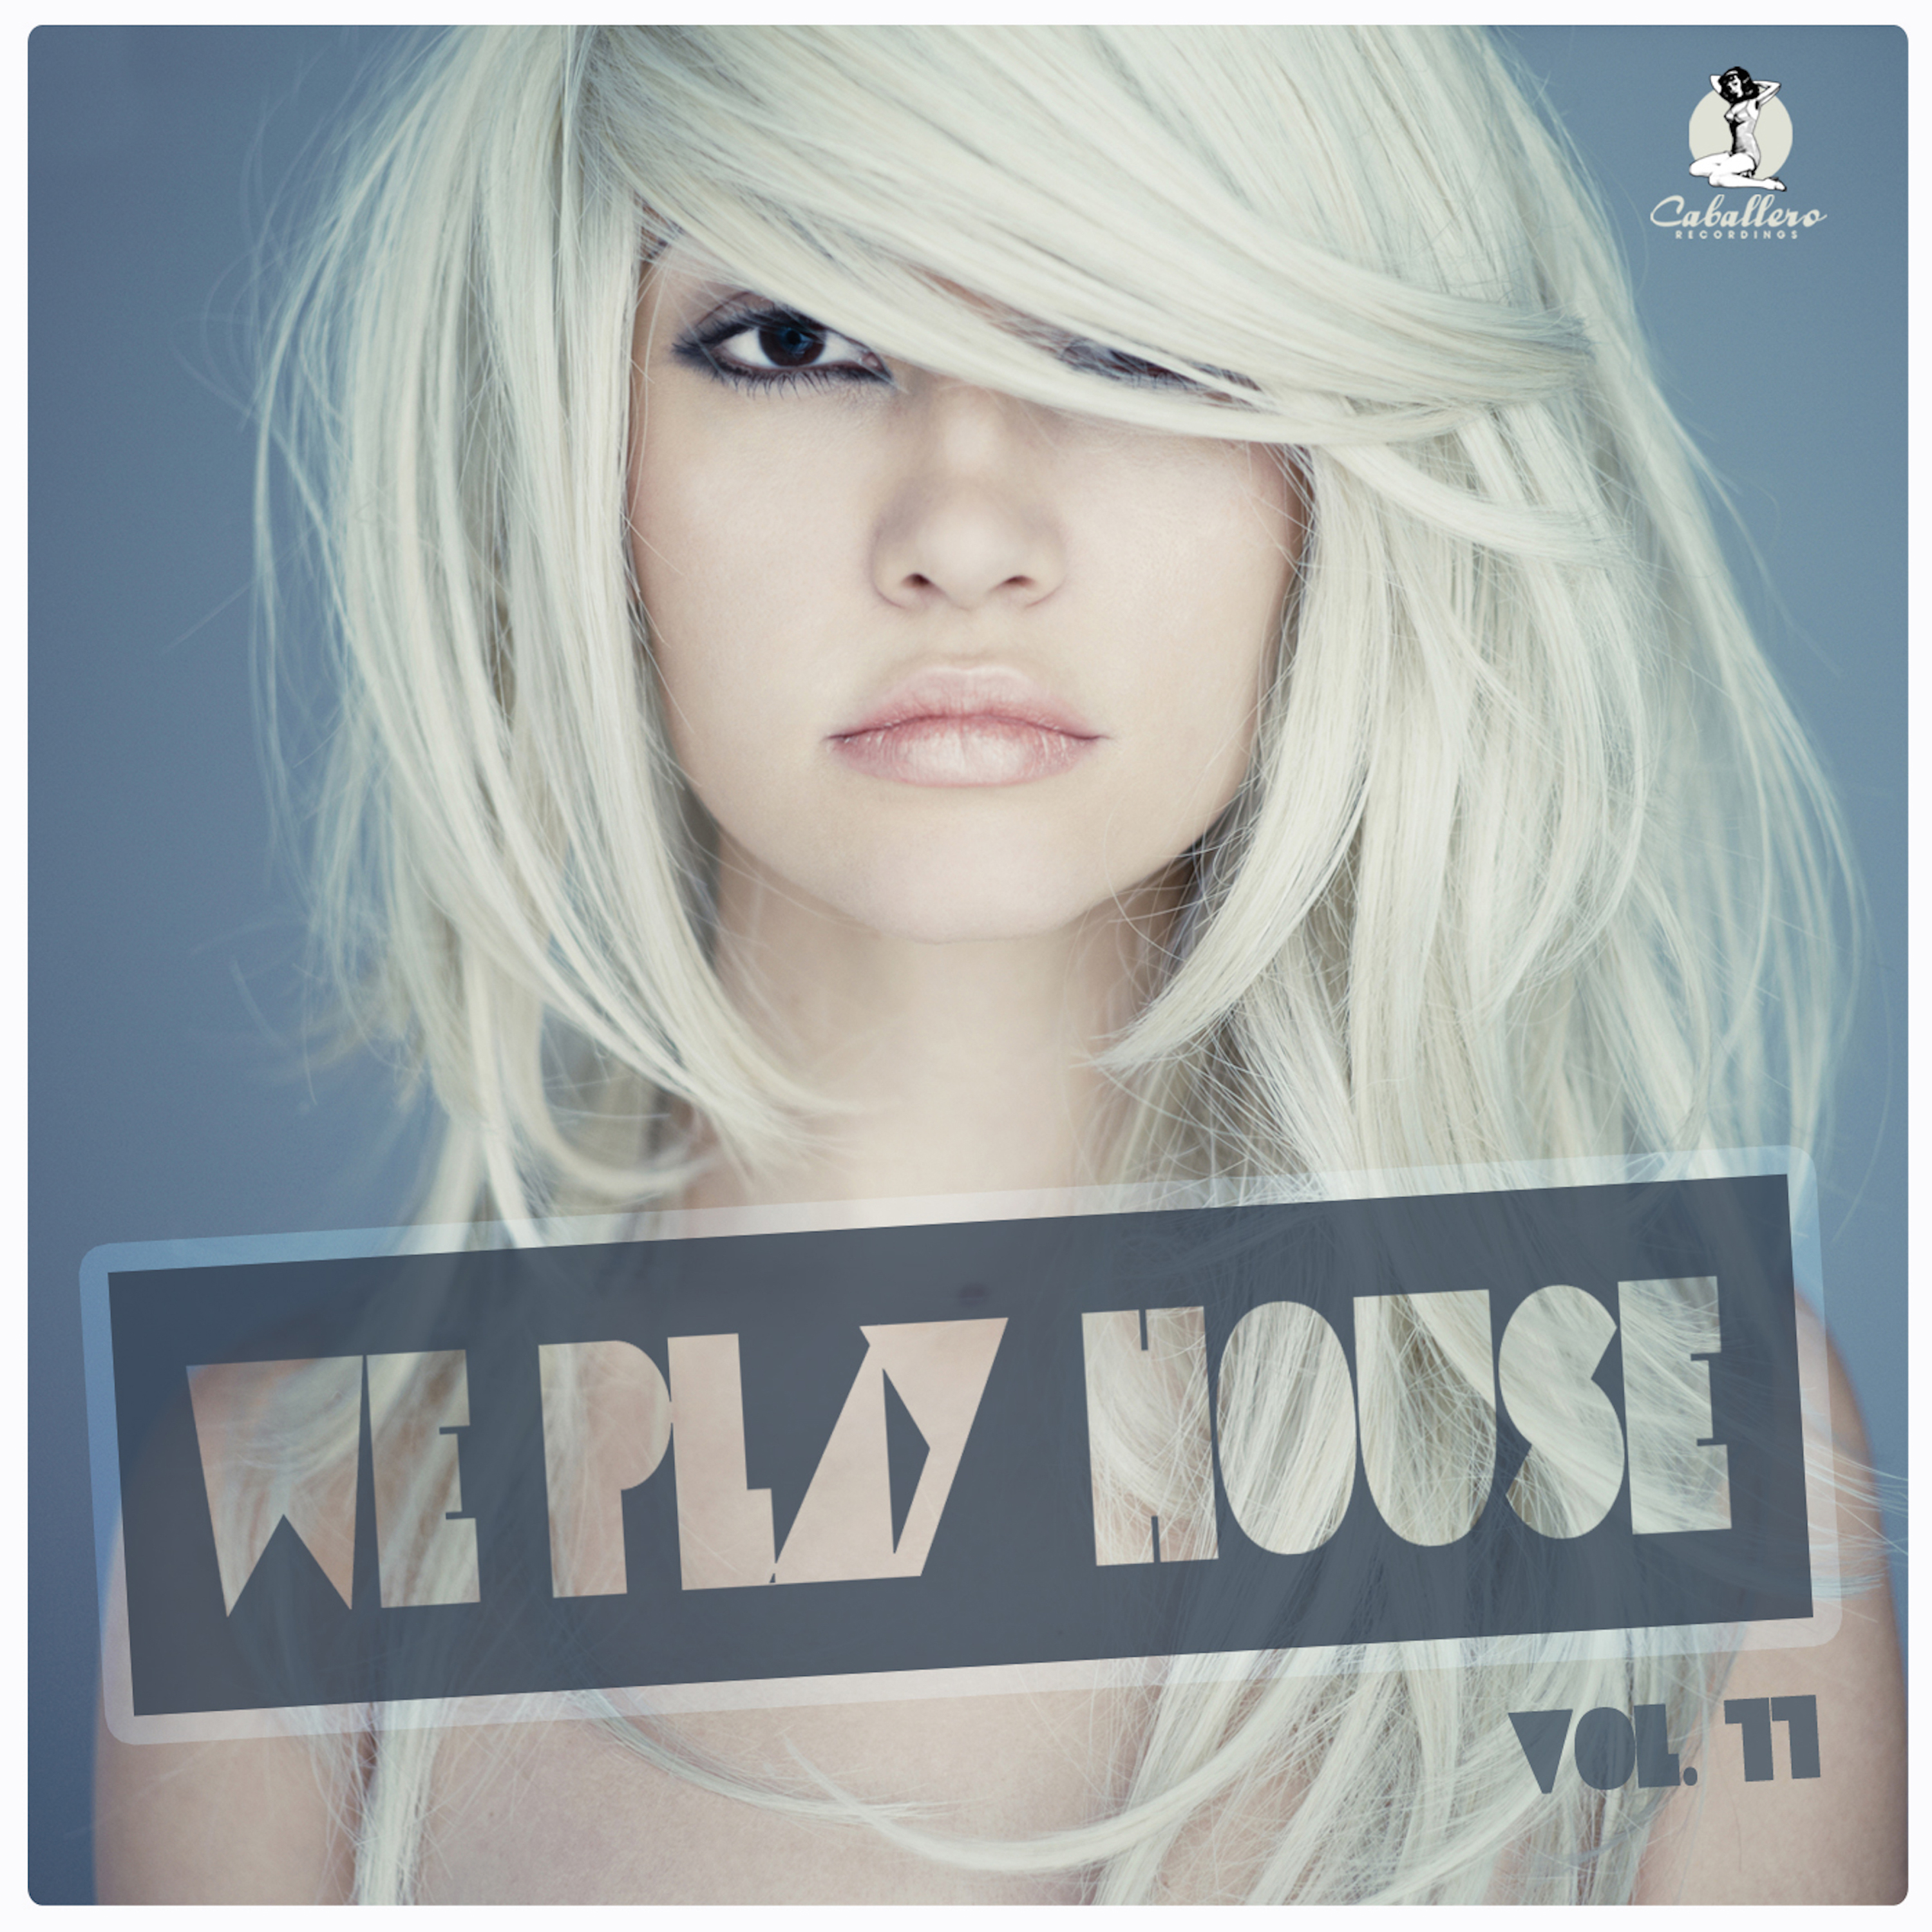 We Play House, Vol. 11